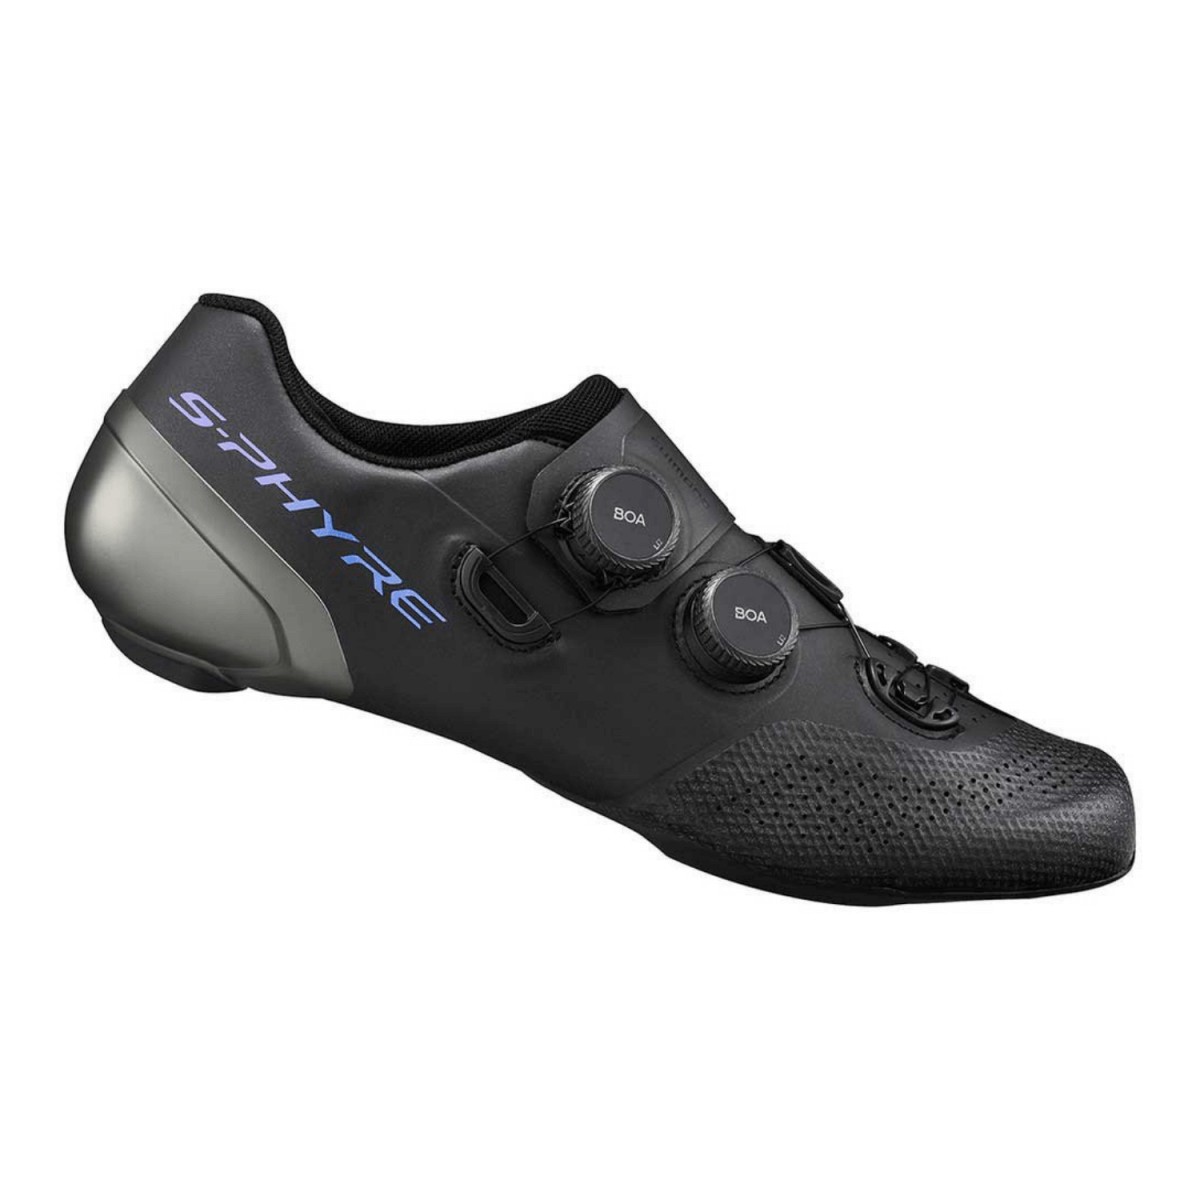 Shimano RC902 S-PHYRE Shoes Black, Size 43 - EUR